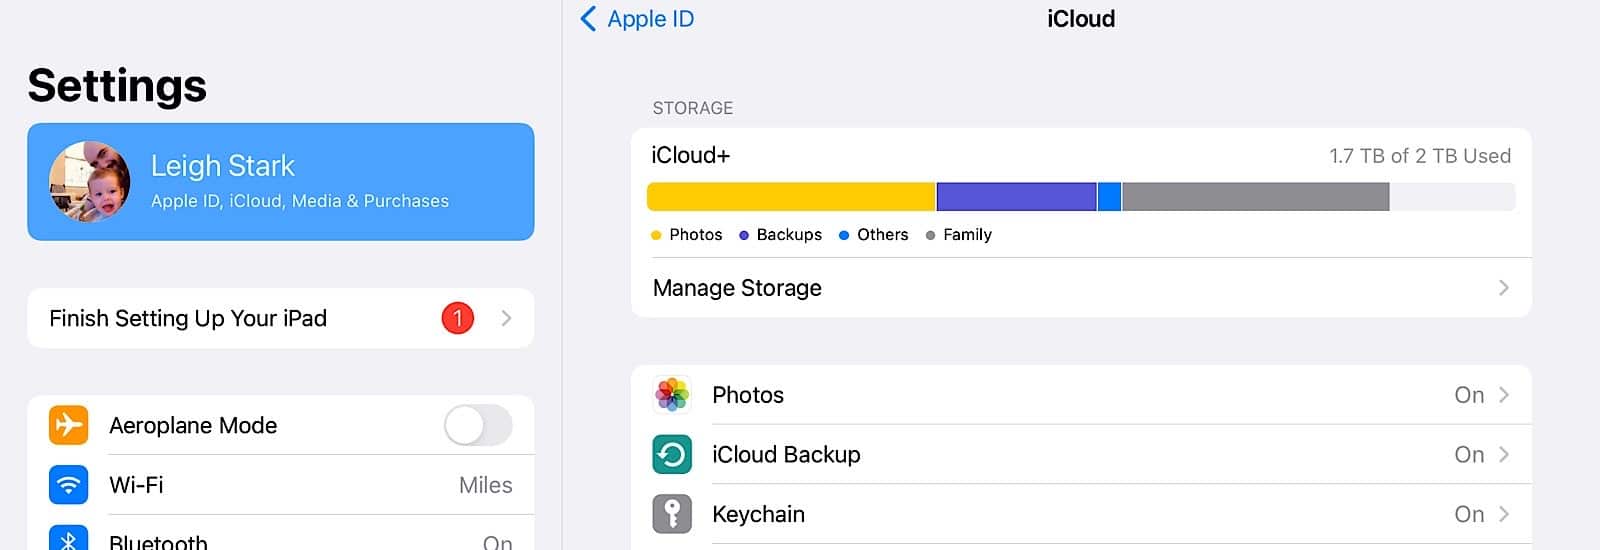 Backup storage options with iCloud